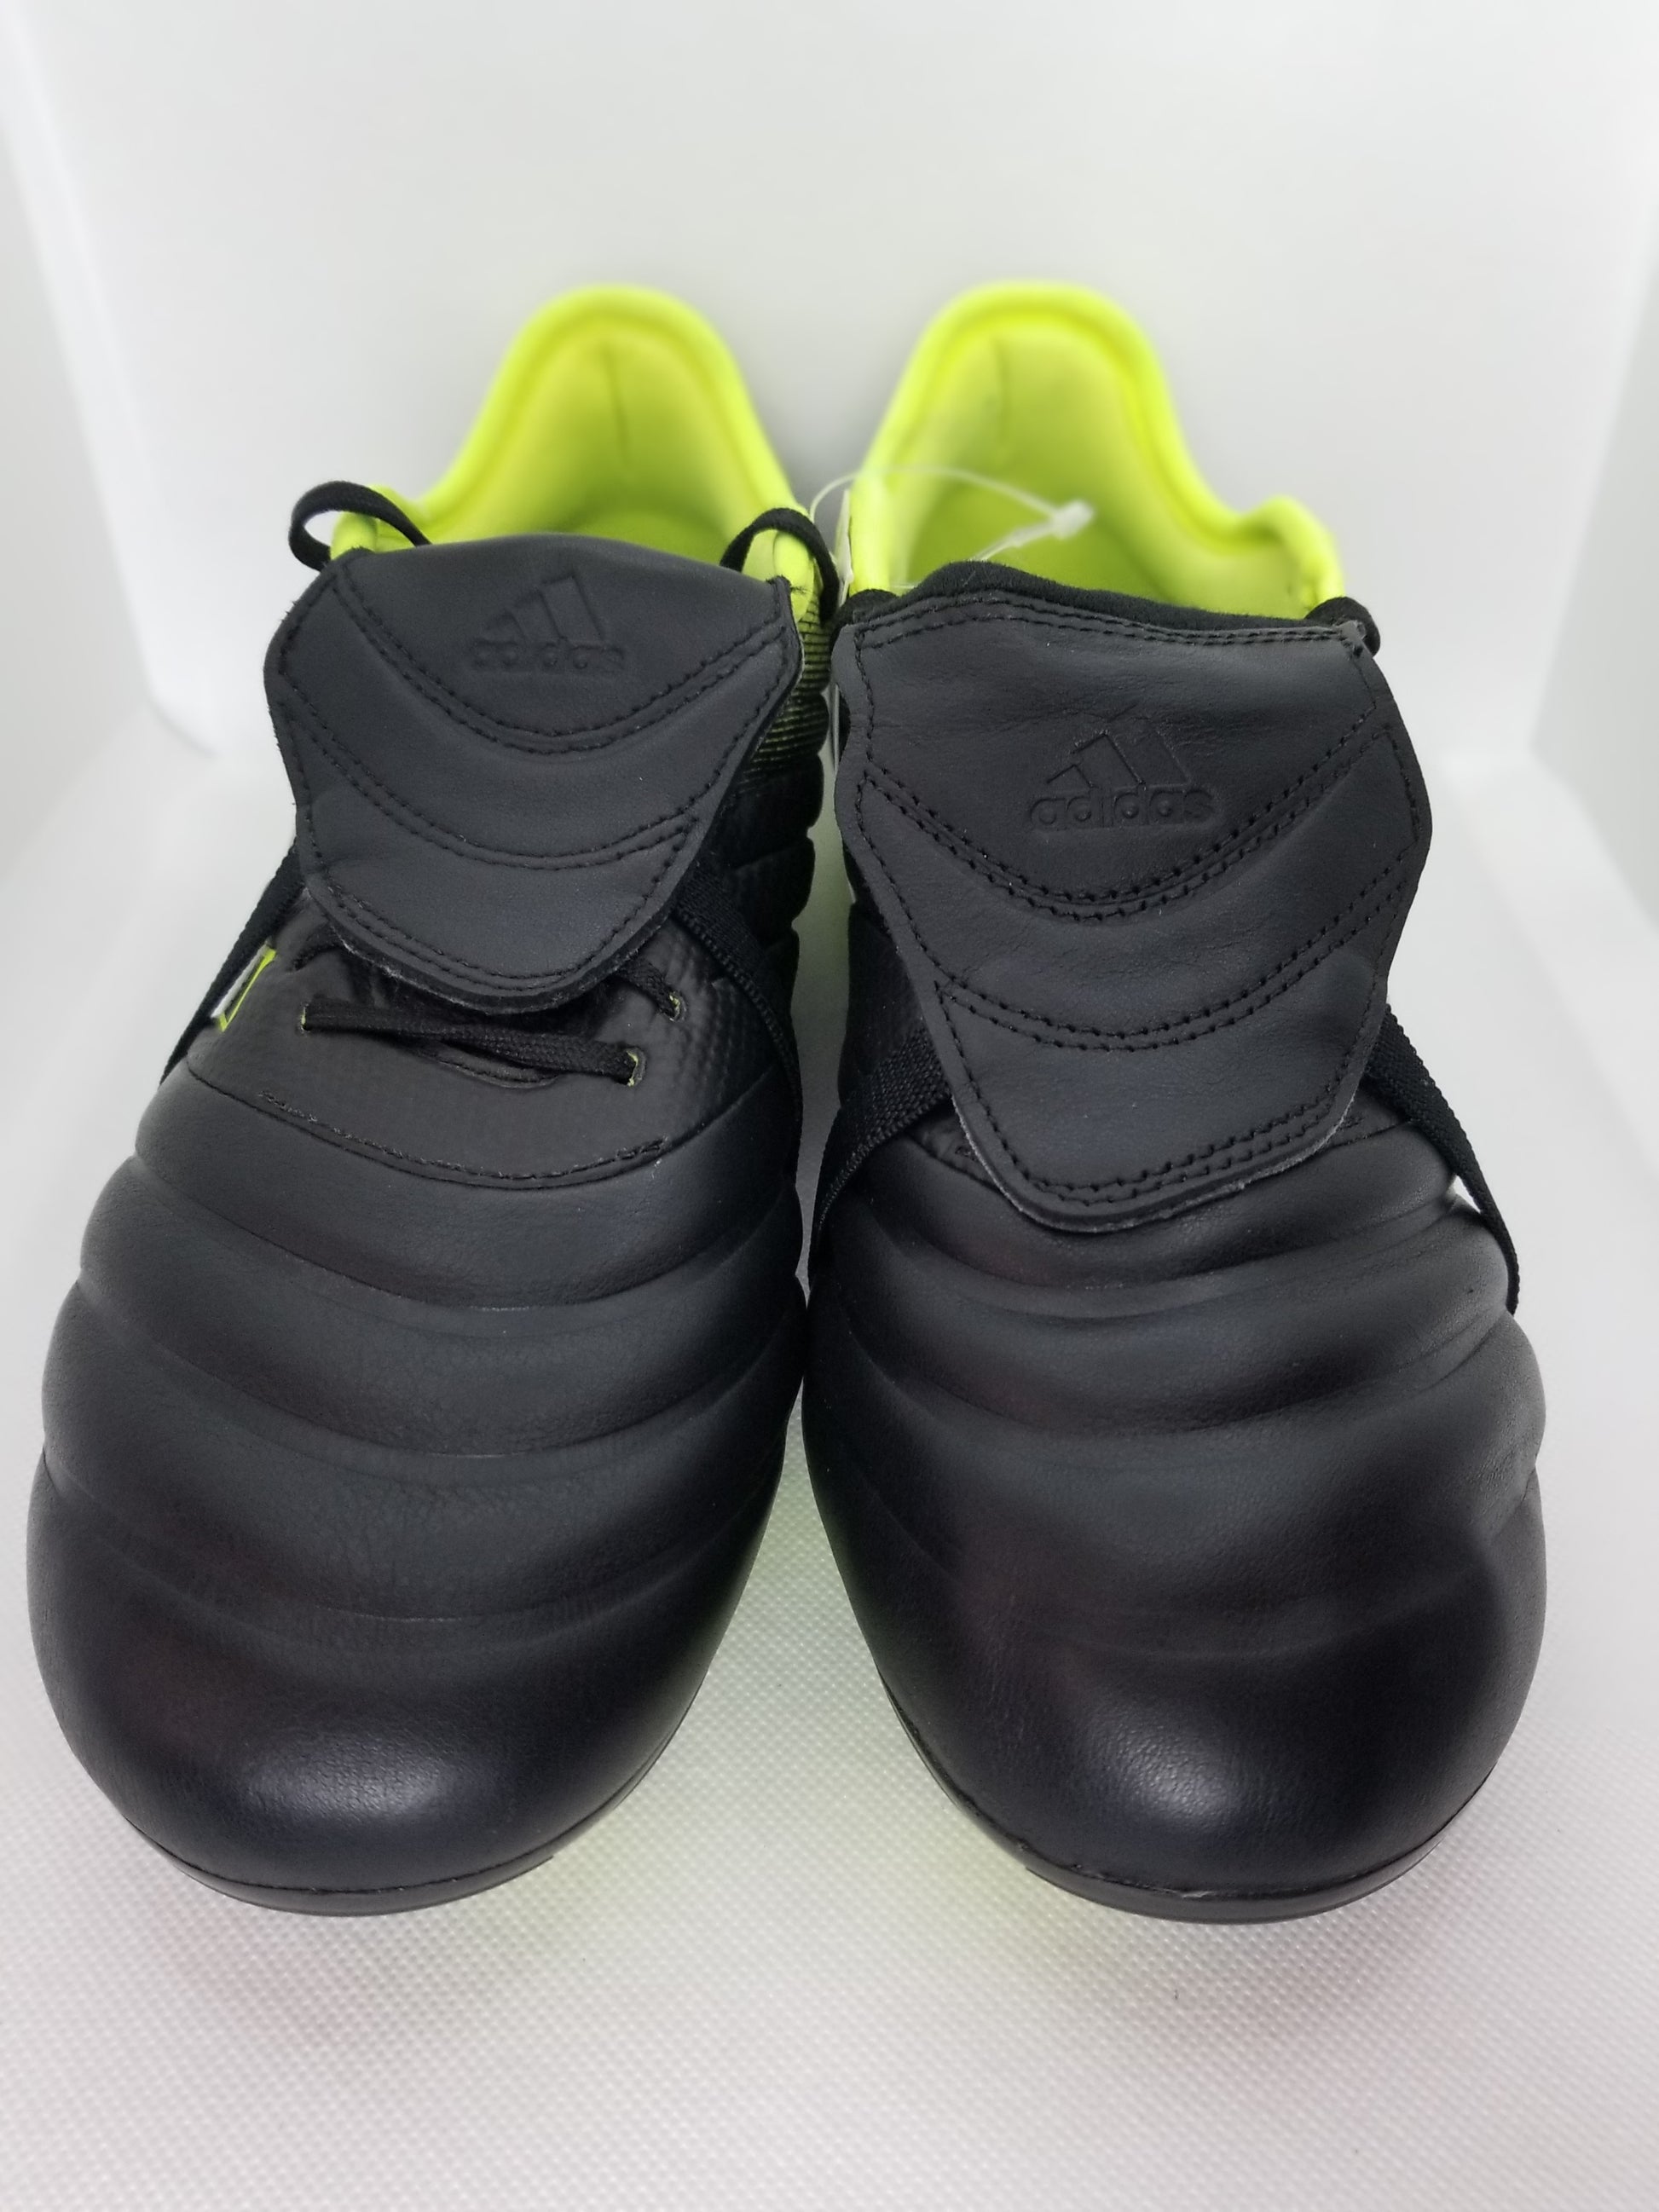 Adidas Copa Gloro 19.2 FG – Boots